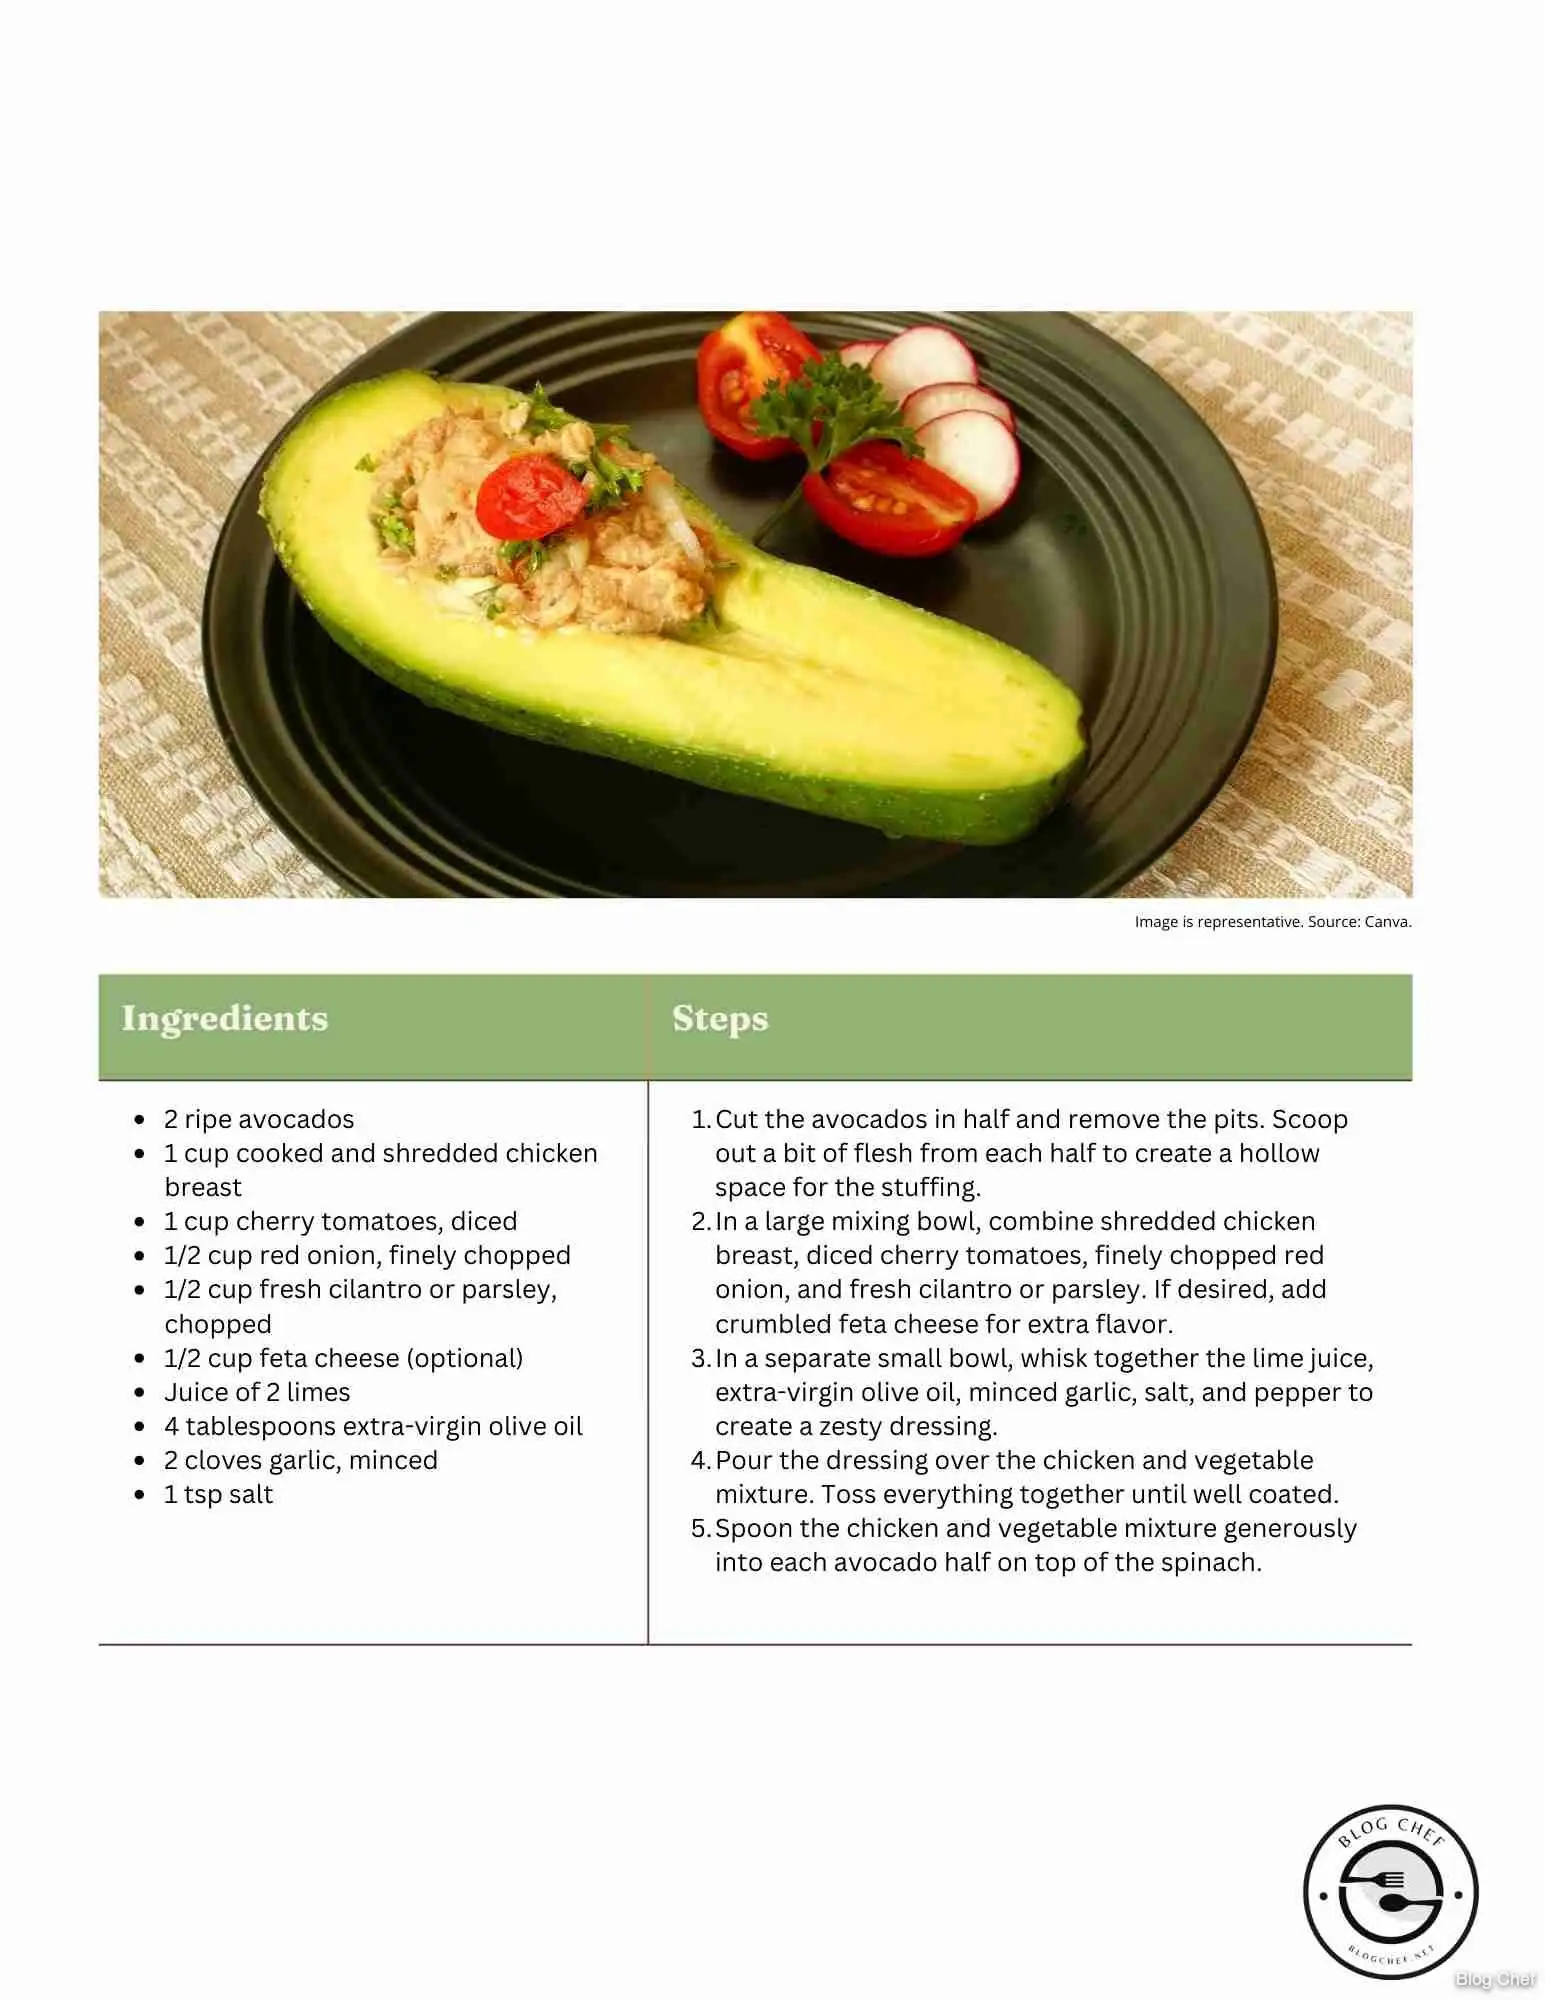 Recipe card for stuffed avocado.